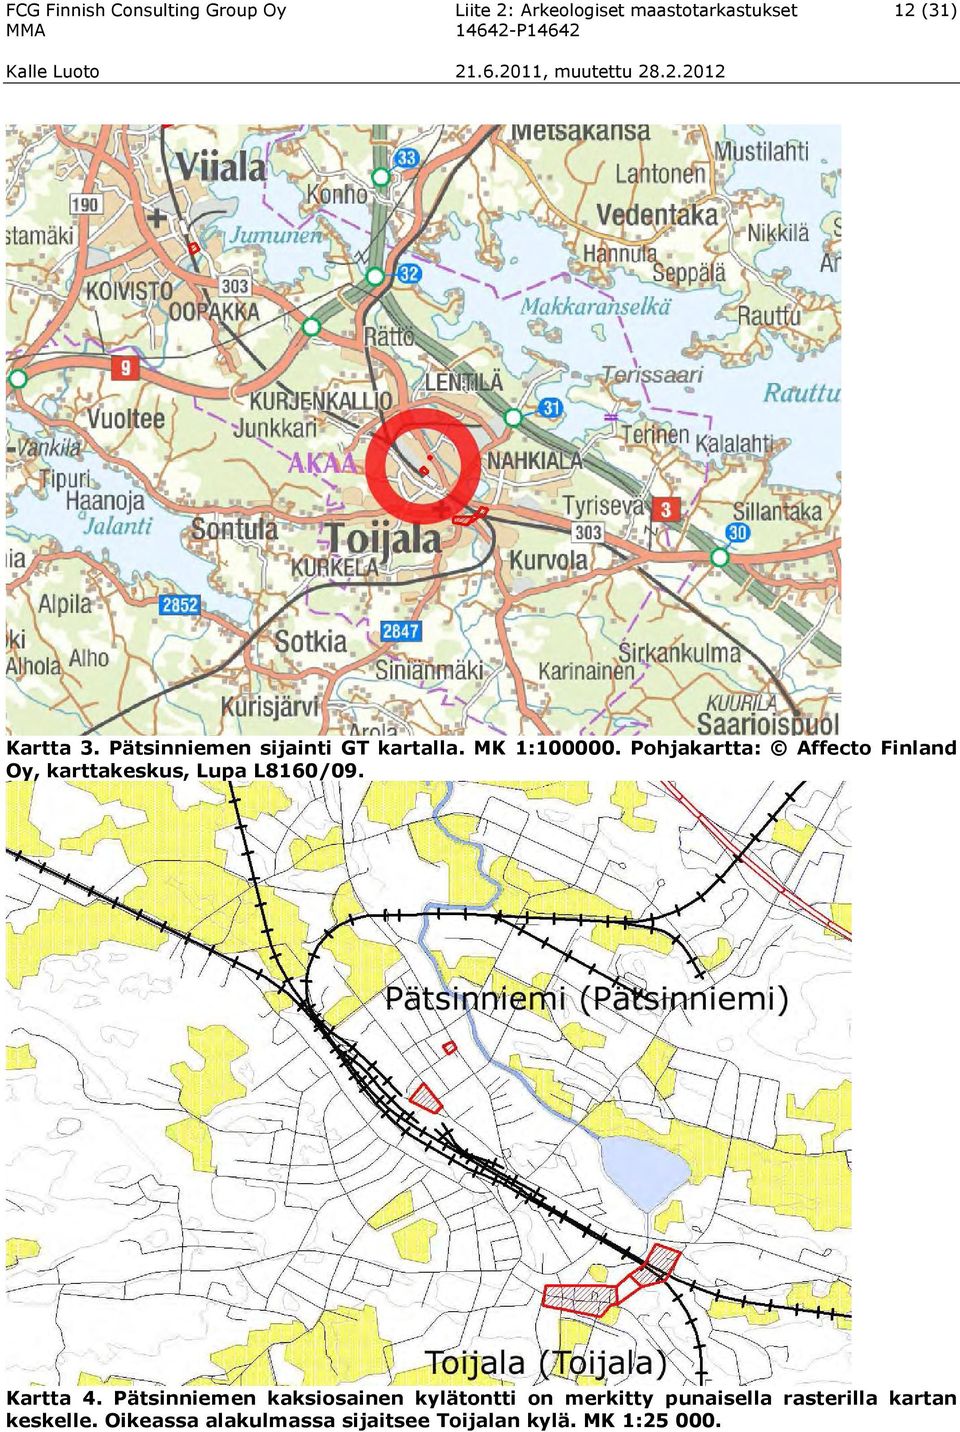 Pohjakartta: Affecto Finland Oy, karttakeskus, Lupa L8160/09. Kartta 4.